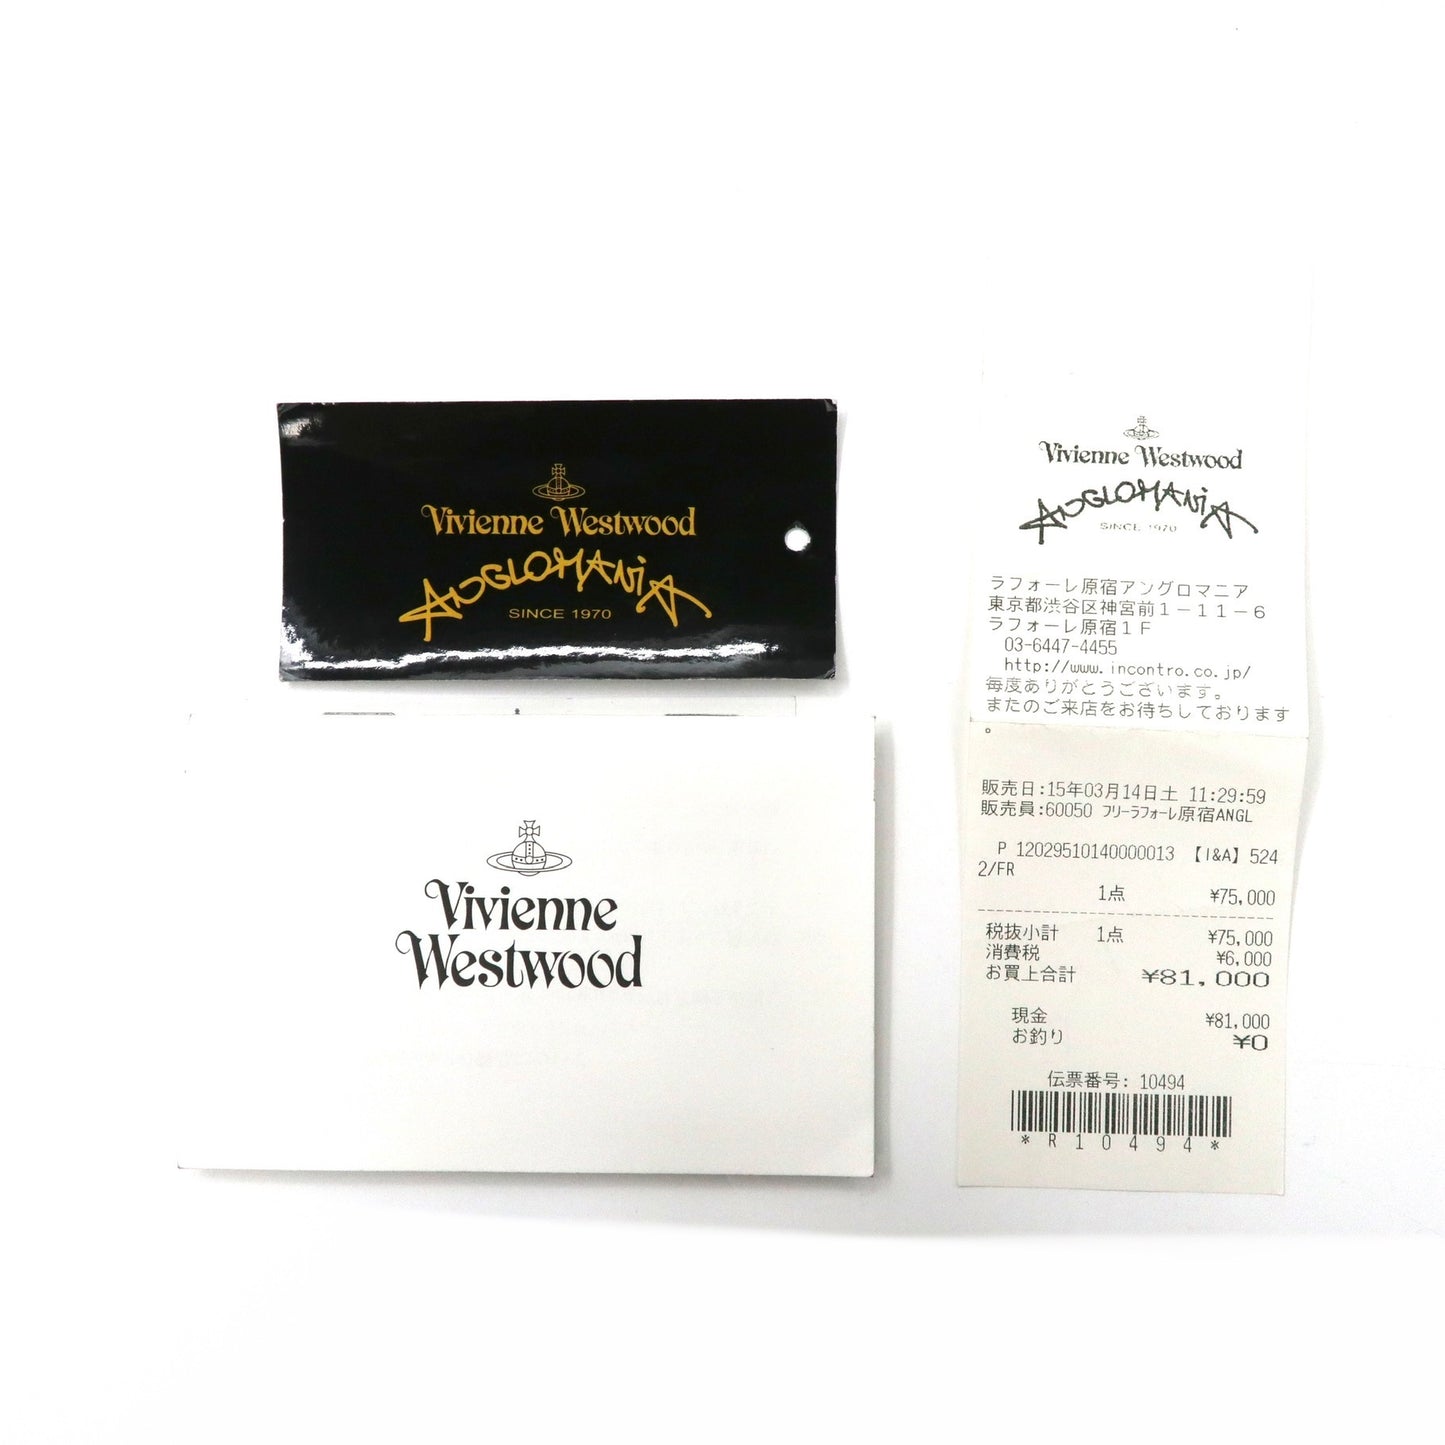 Vivienne Westwood ANGLOMANIA ハンドバッグ ブラック レザー FRILLY SNAKE 12-02-951014 5242V